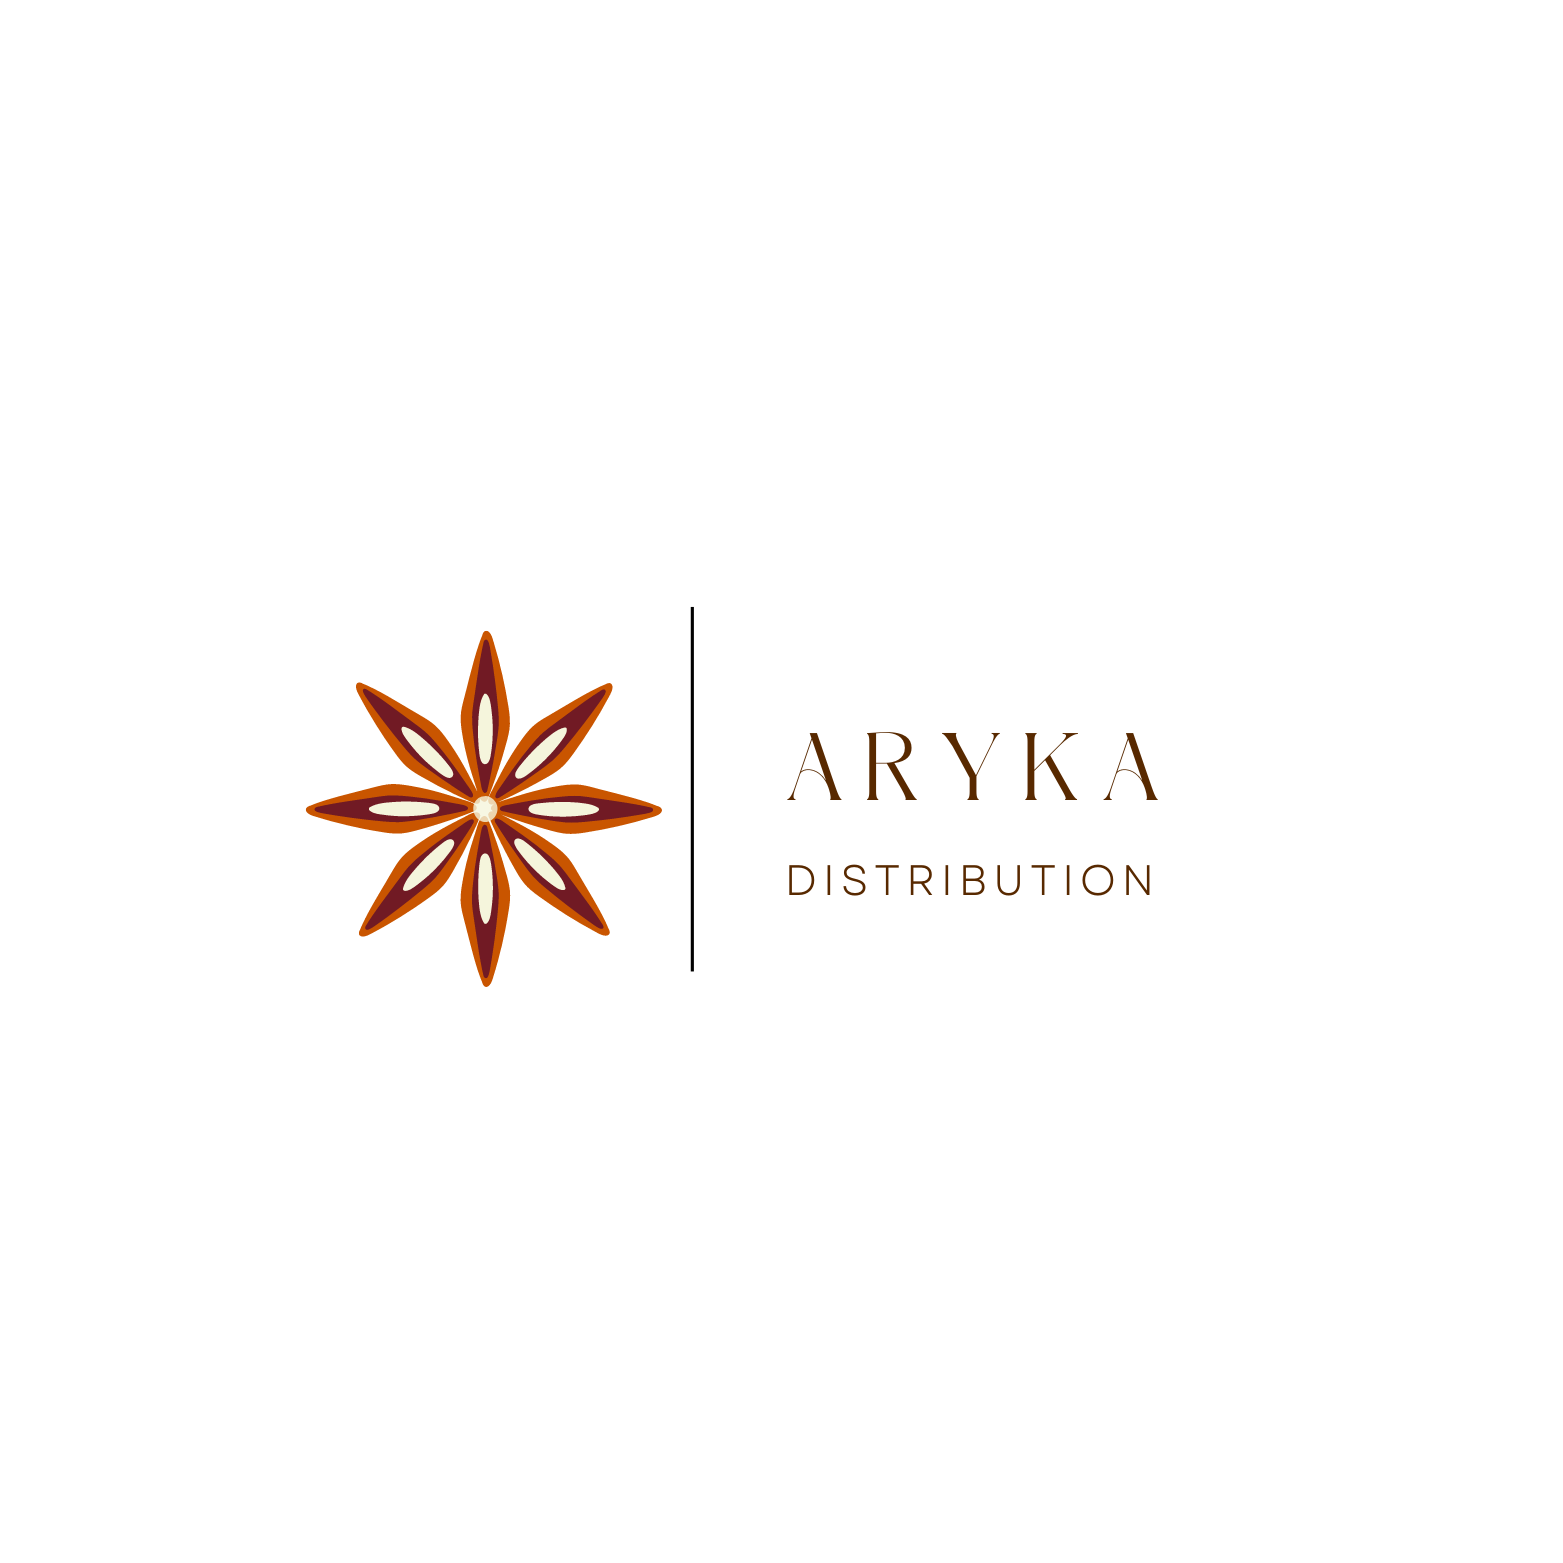 Aryka distribution logo